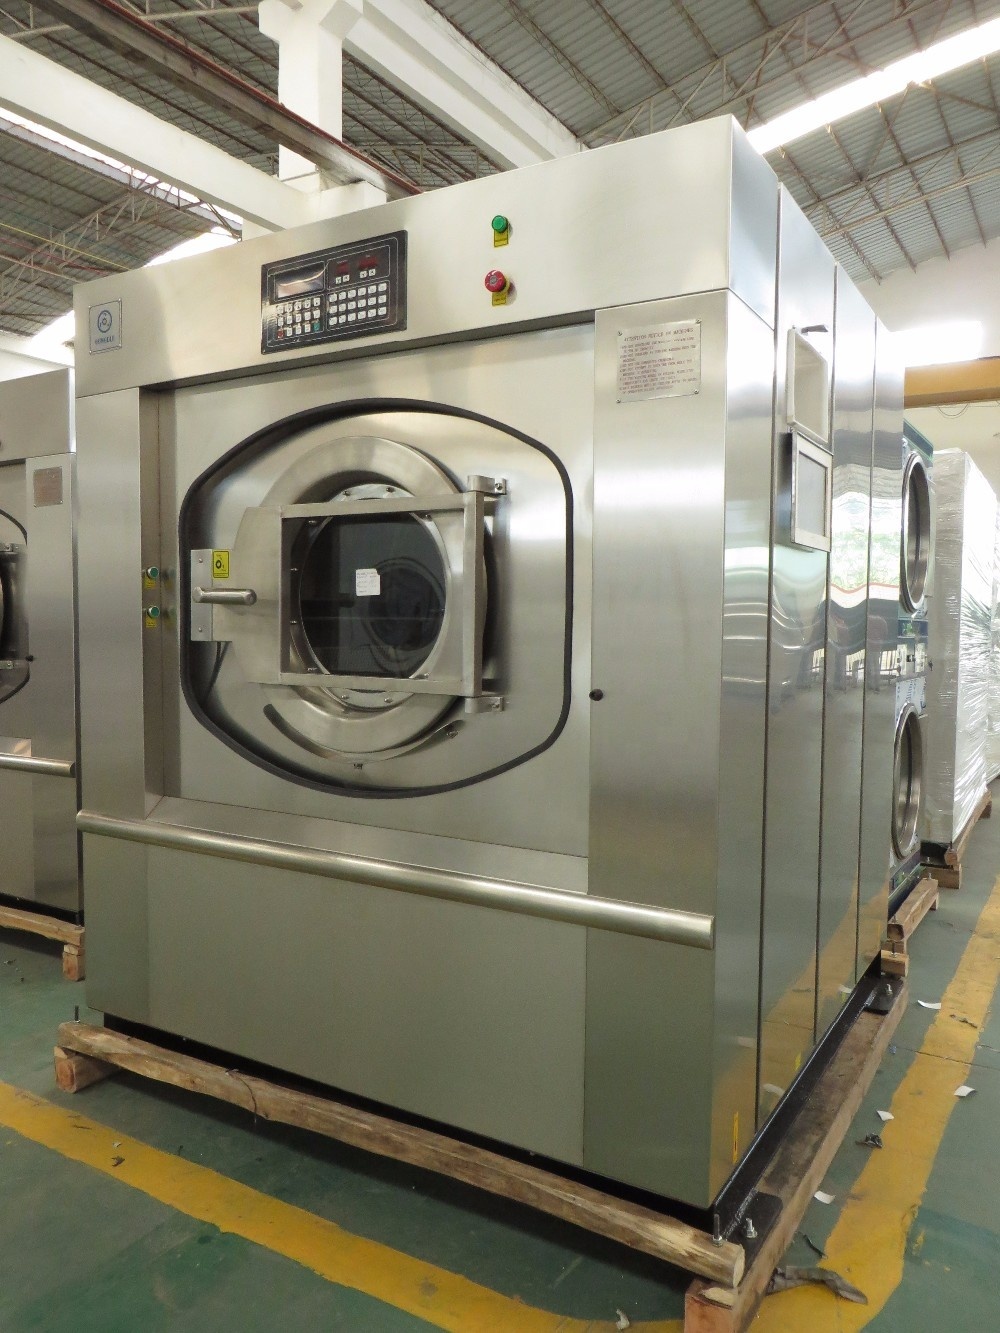 120kg industrial CE approval heavy duty washing machine